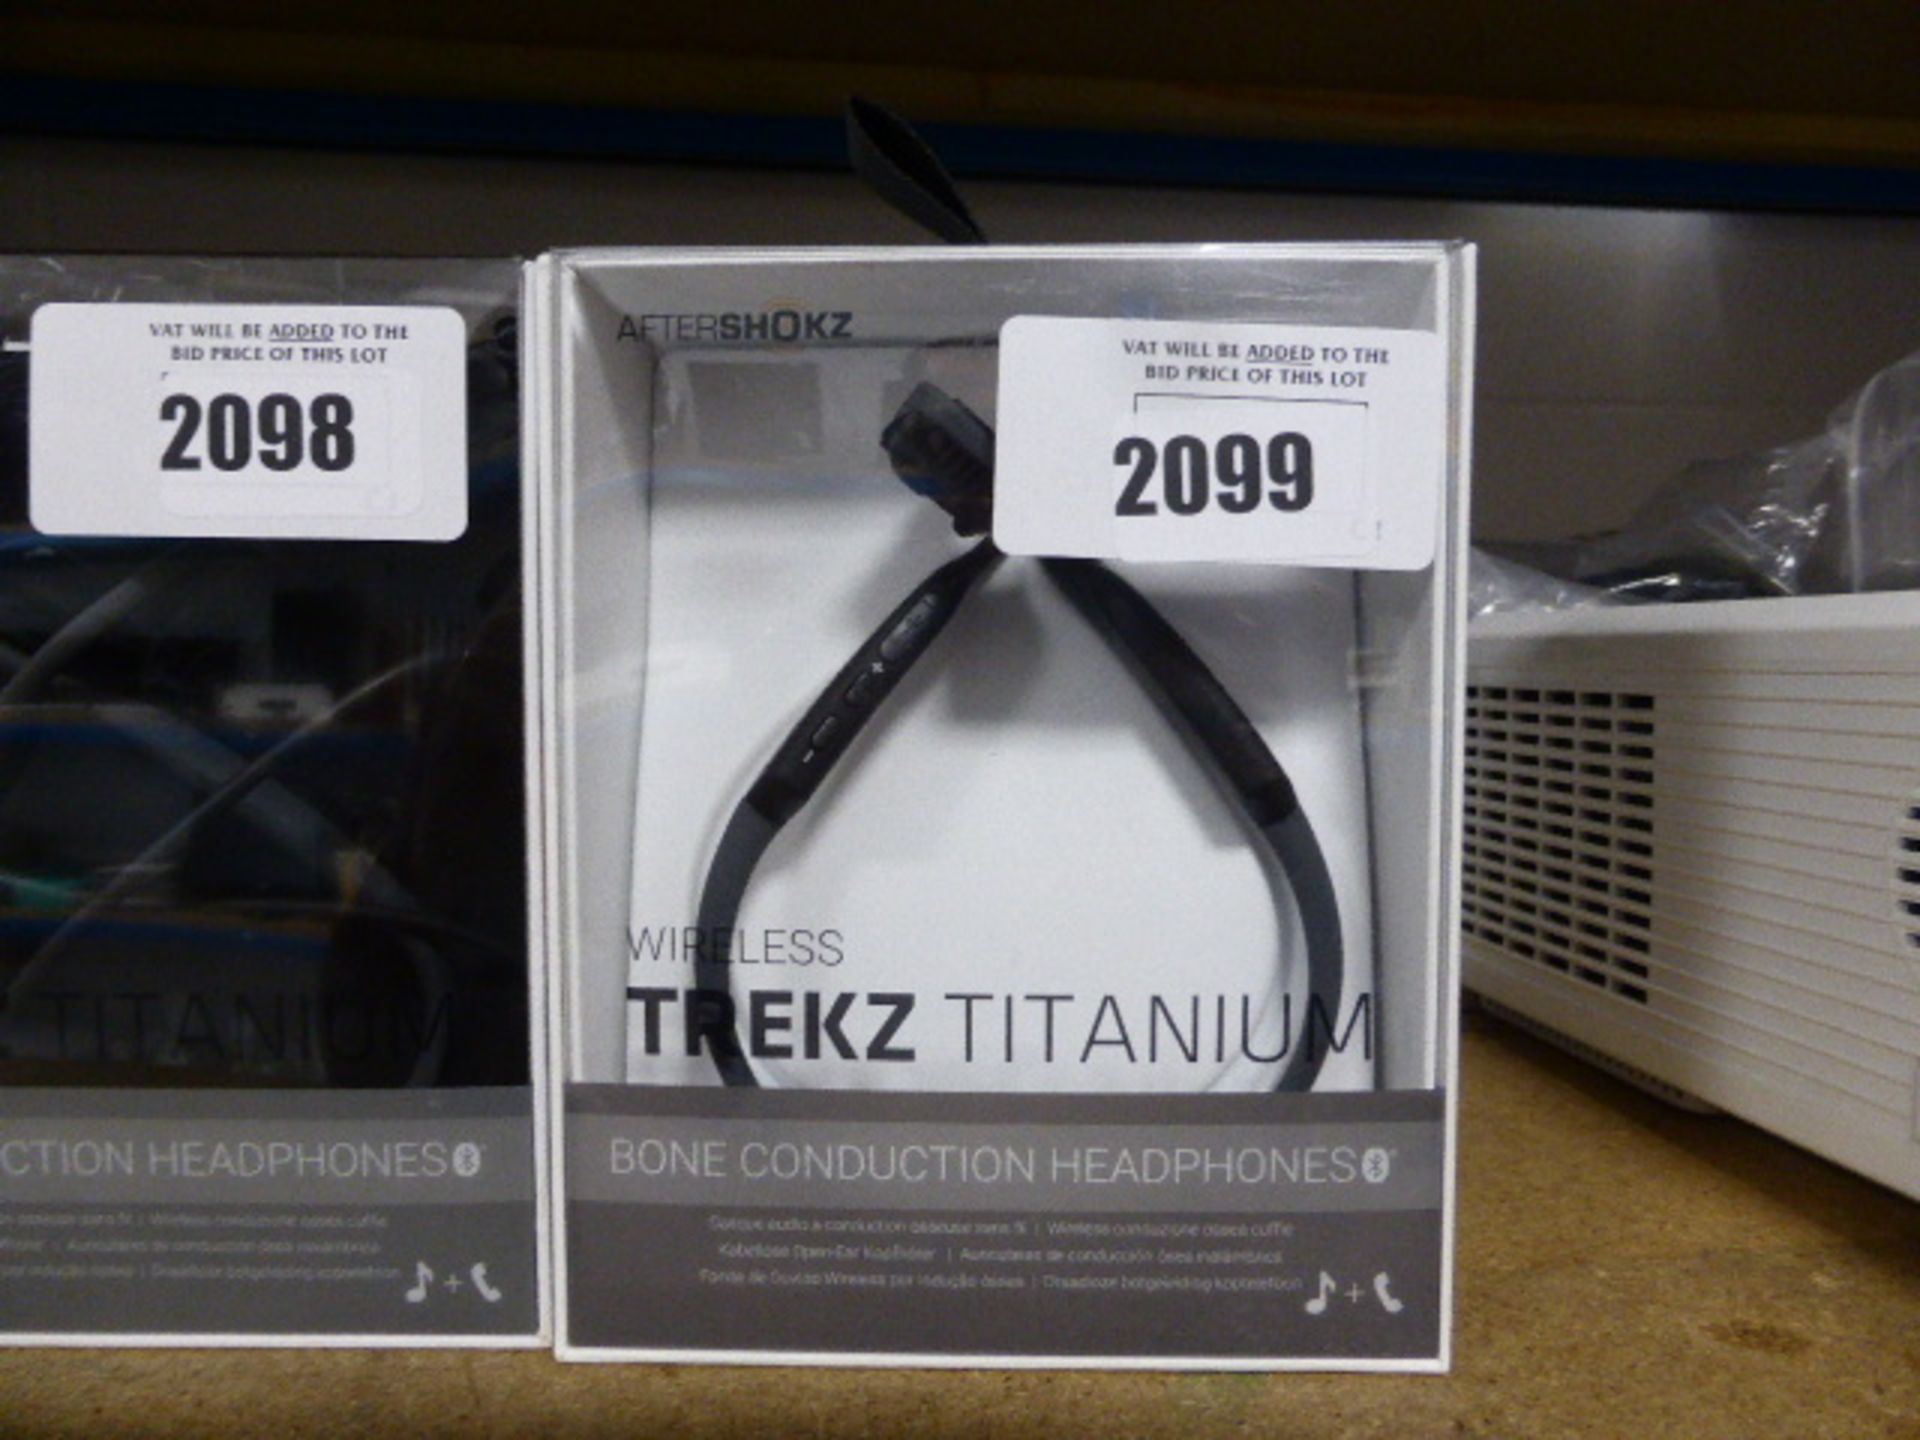 Trex wireless bone conduction headphones, boxed